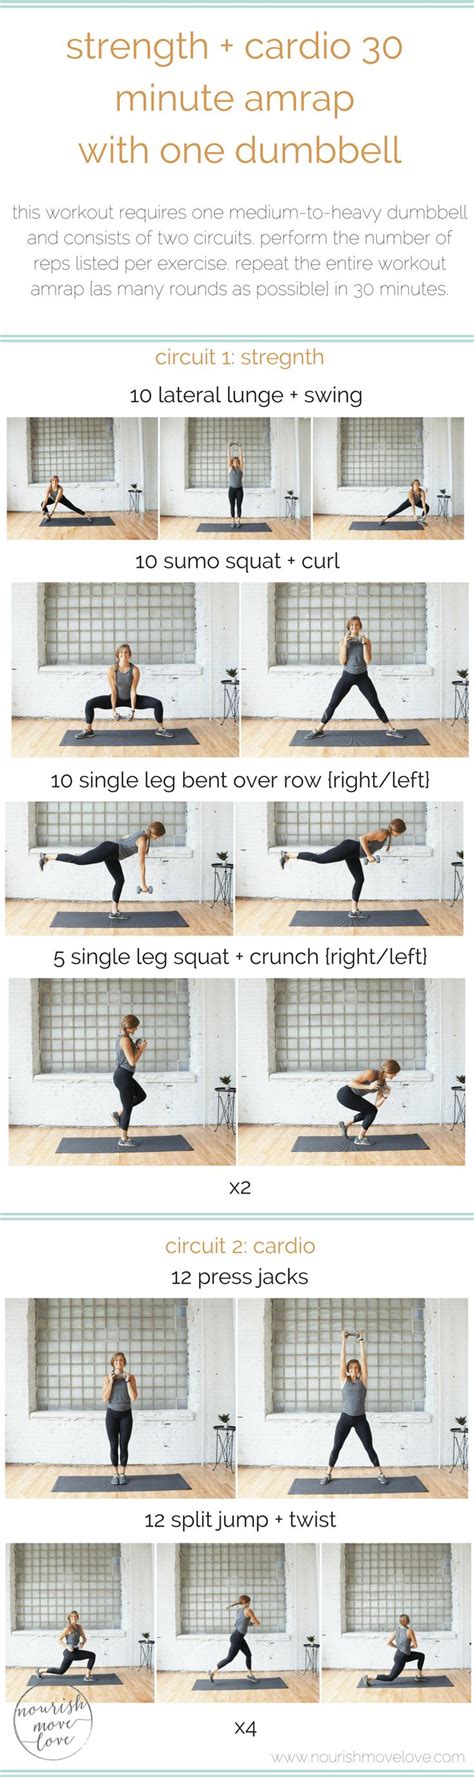 Strength Cardio Minute Amrap Workout Nourish Move Love Amrap Workout Total Body